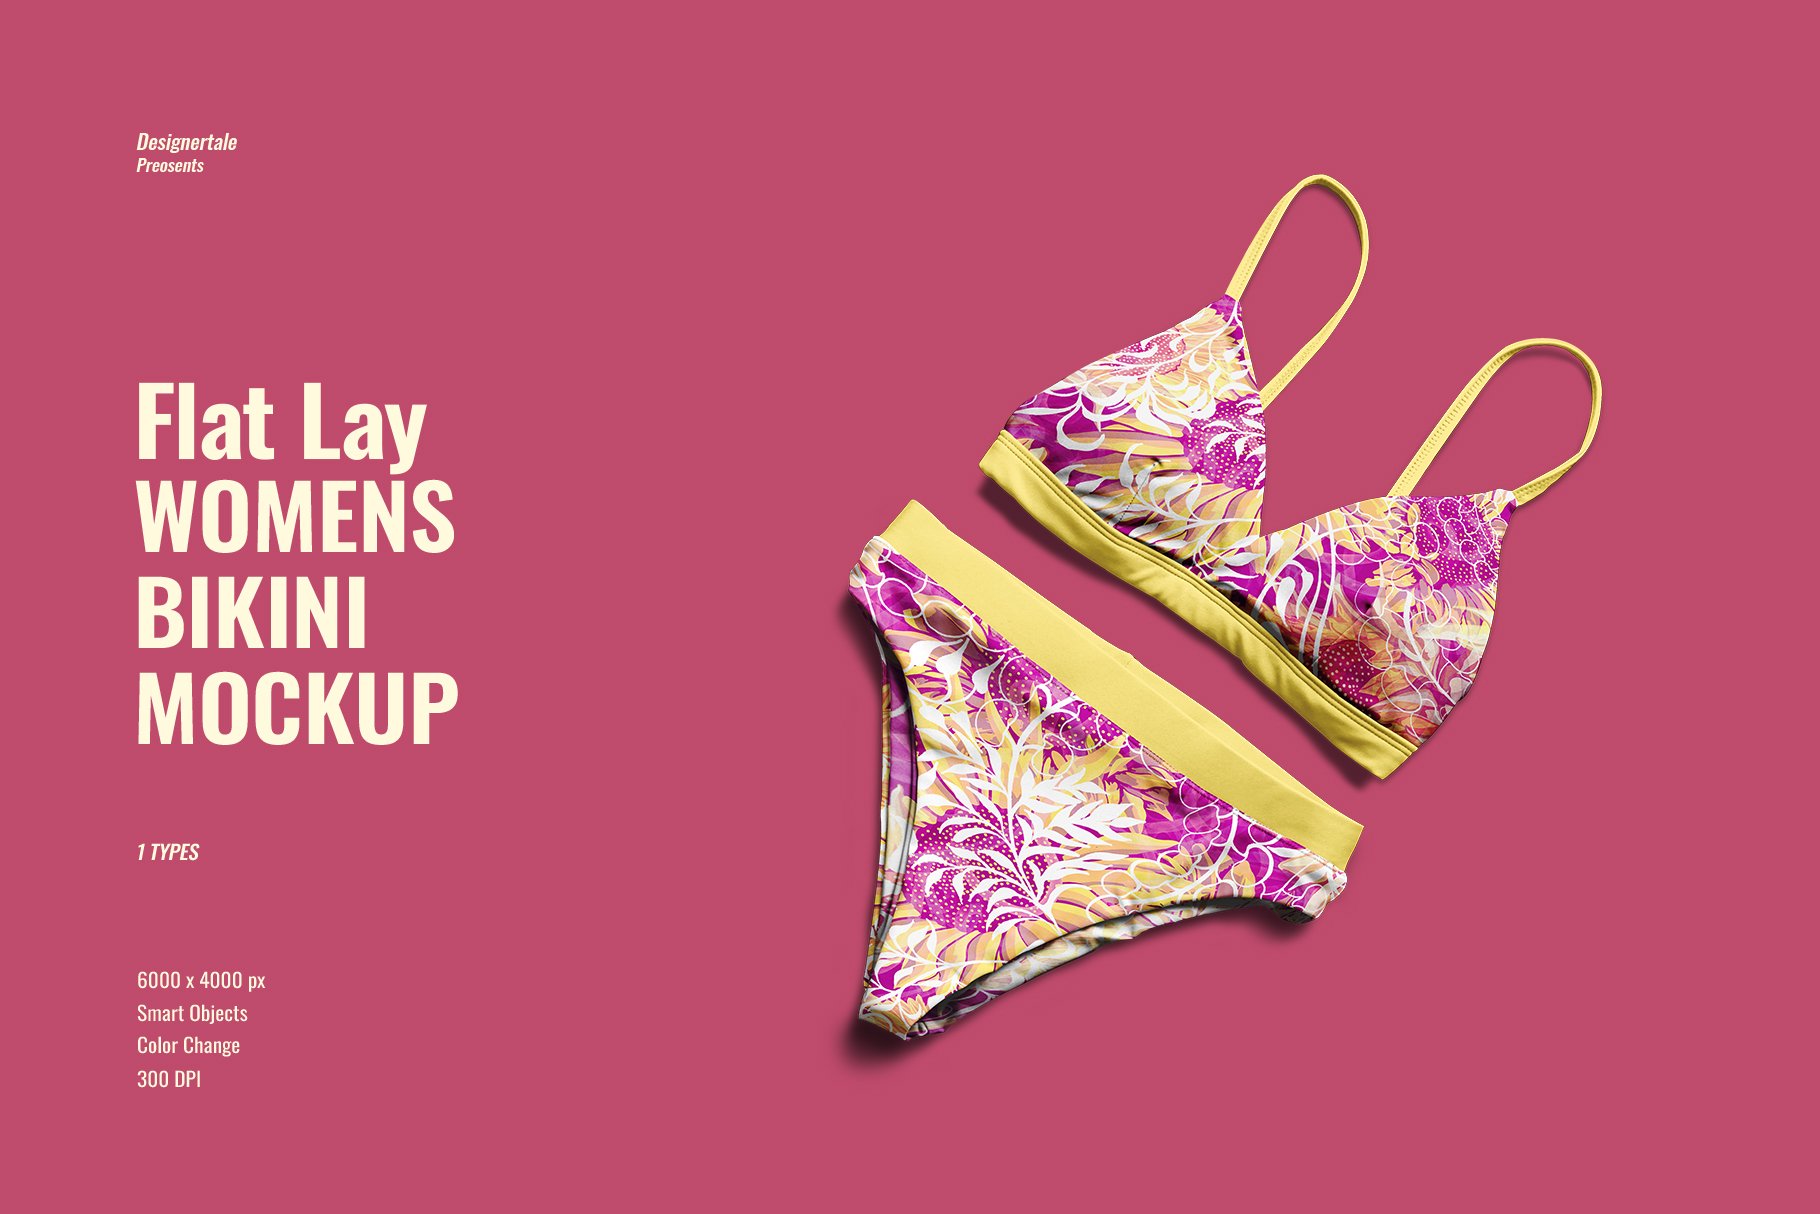 Flat Lay Womens Bikini Mockup cover image.